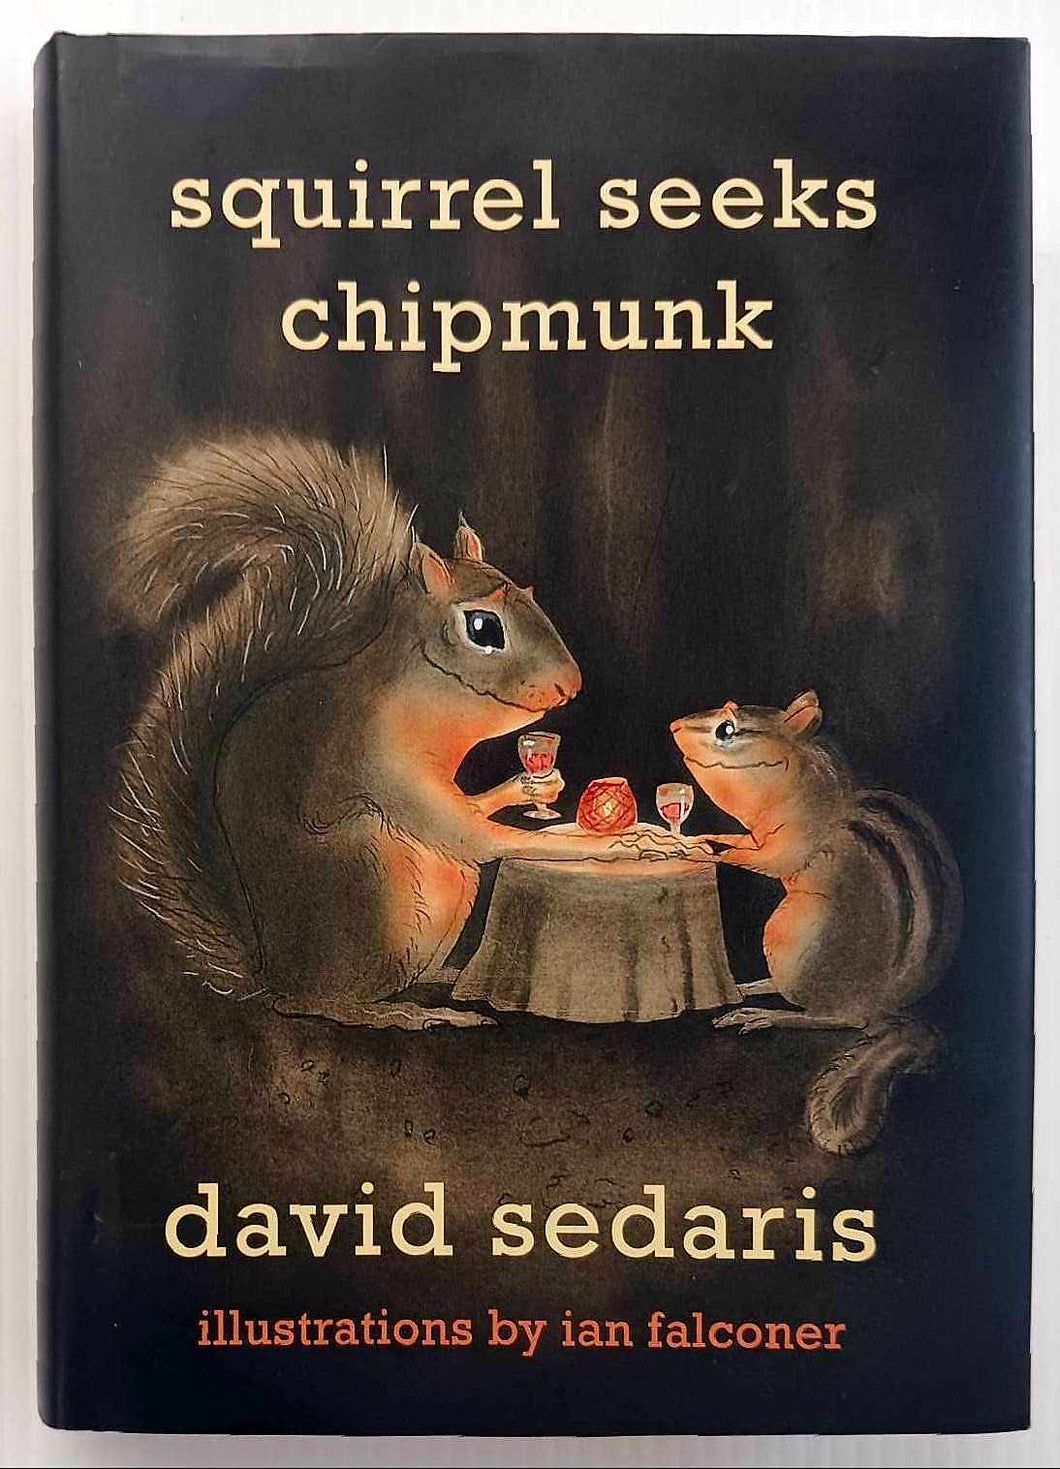 SQUIRREL SEEKS CHIPMUNK - David Sedaris